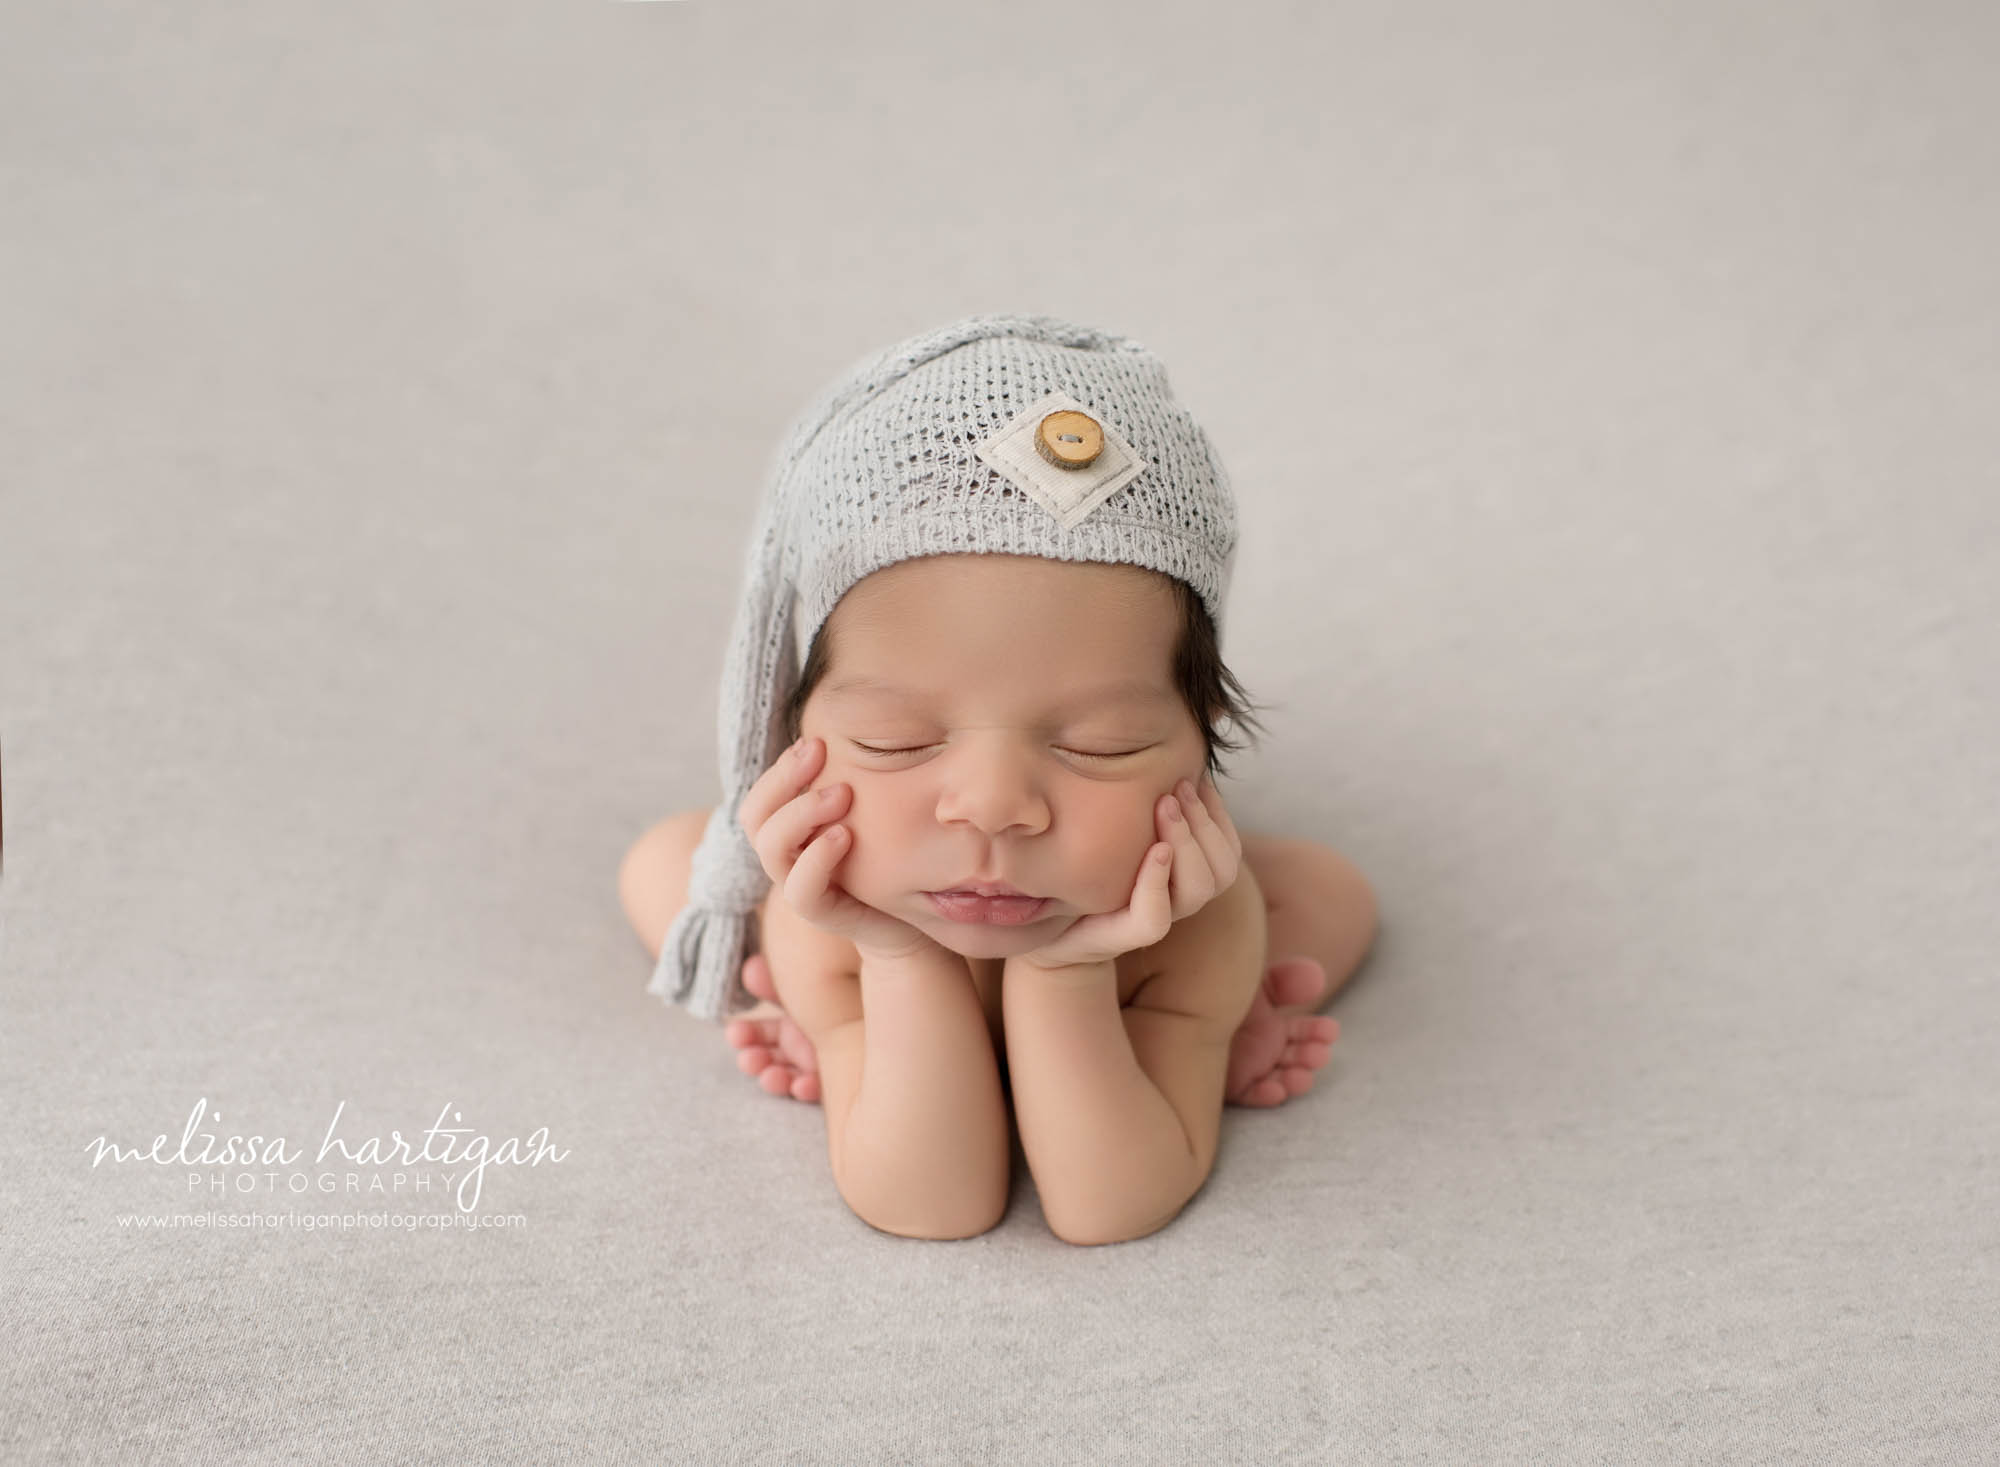 Melissa Hartigan Photography CT Newborn Photographer East Hartford baby boy sleeping in froggy pose wearing light blue knit hat